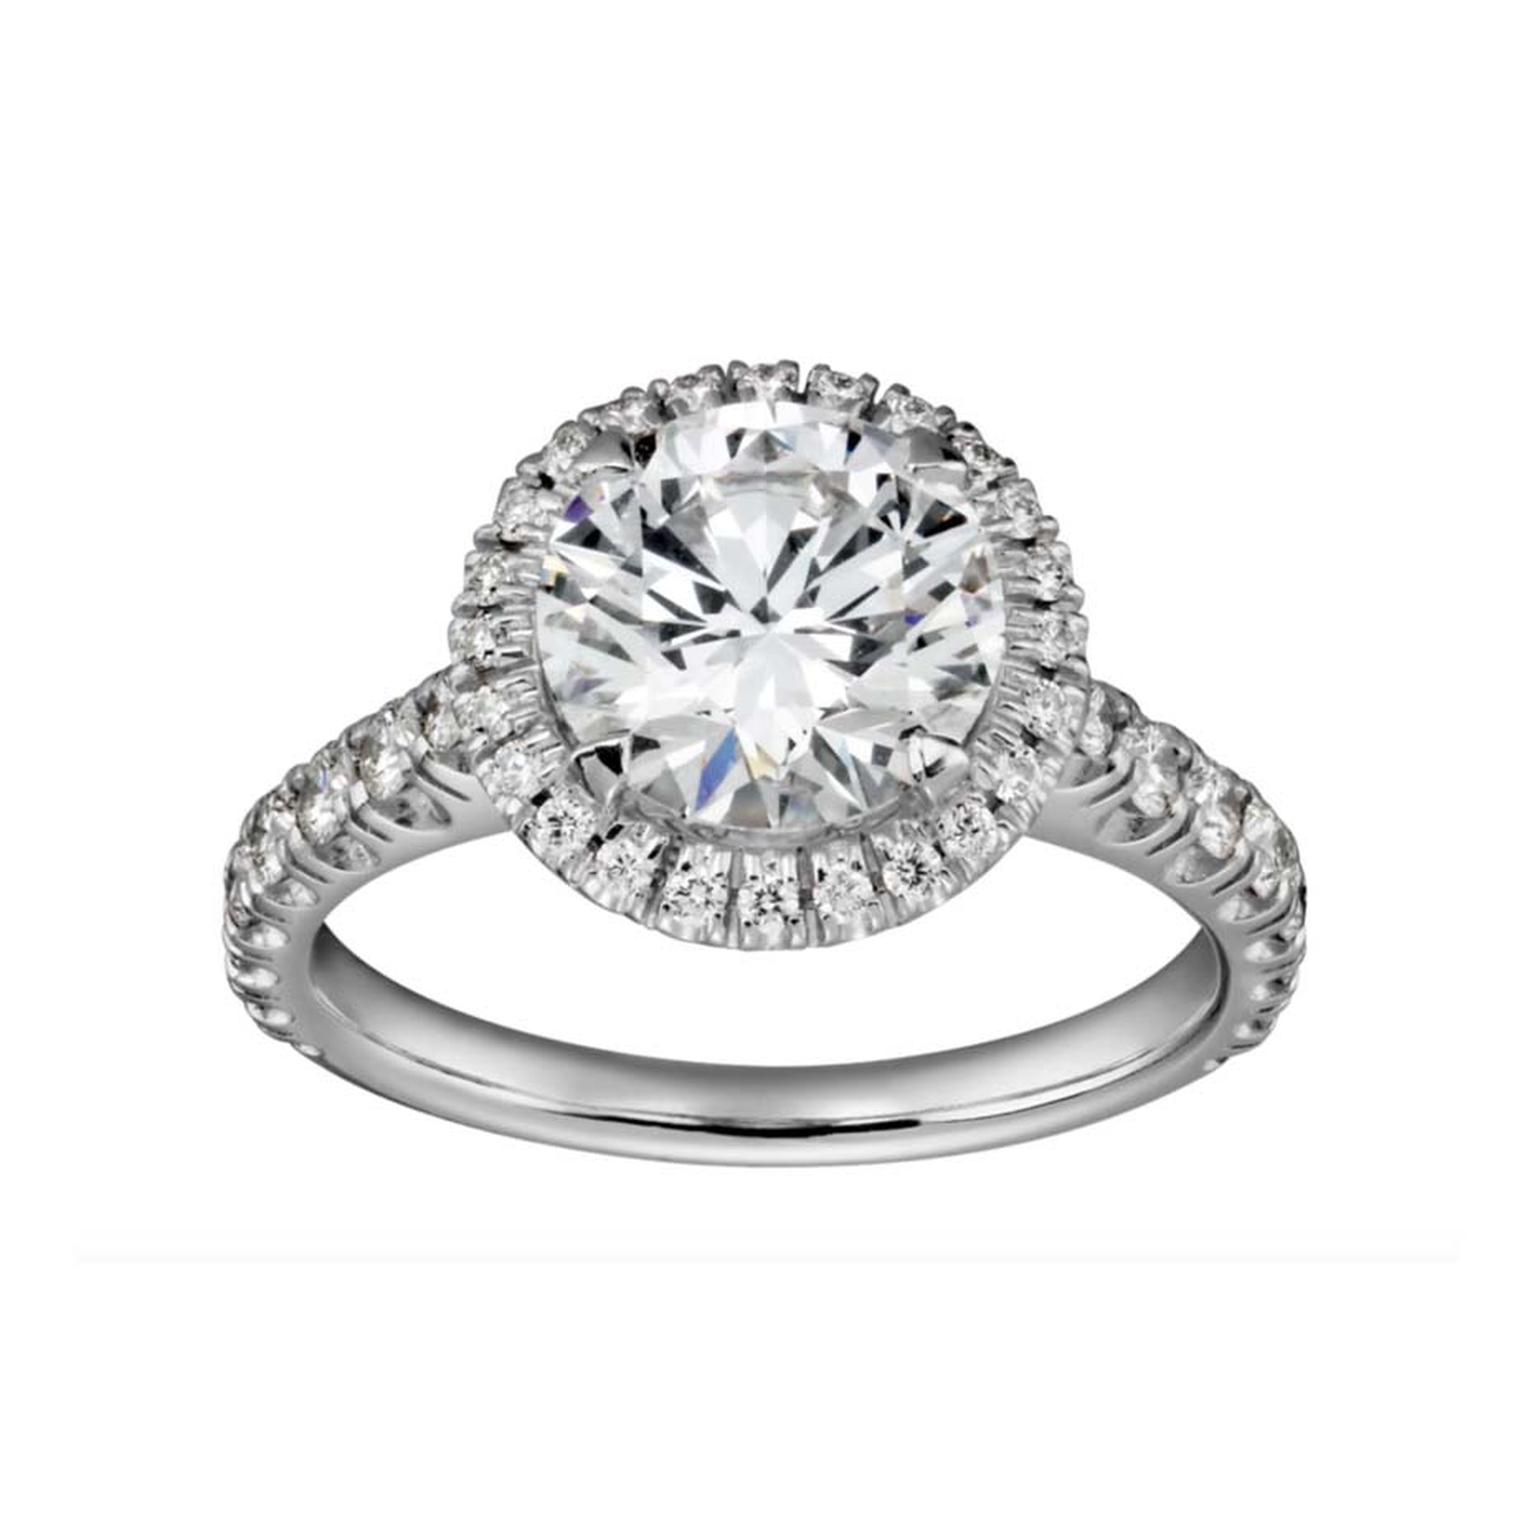 Cartier jewellery Destinée solitaire platinum engagement ring, enhanced by a halo of micro pavé diamonds surrounding a central brilliant-cut diamond.